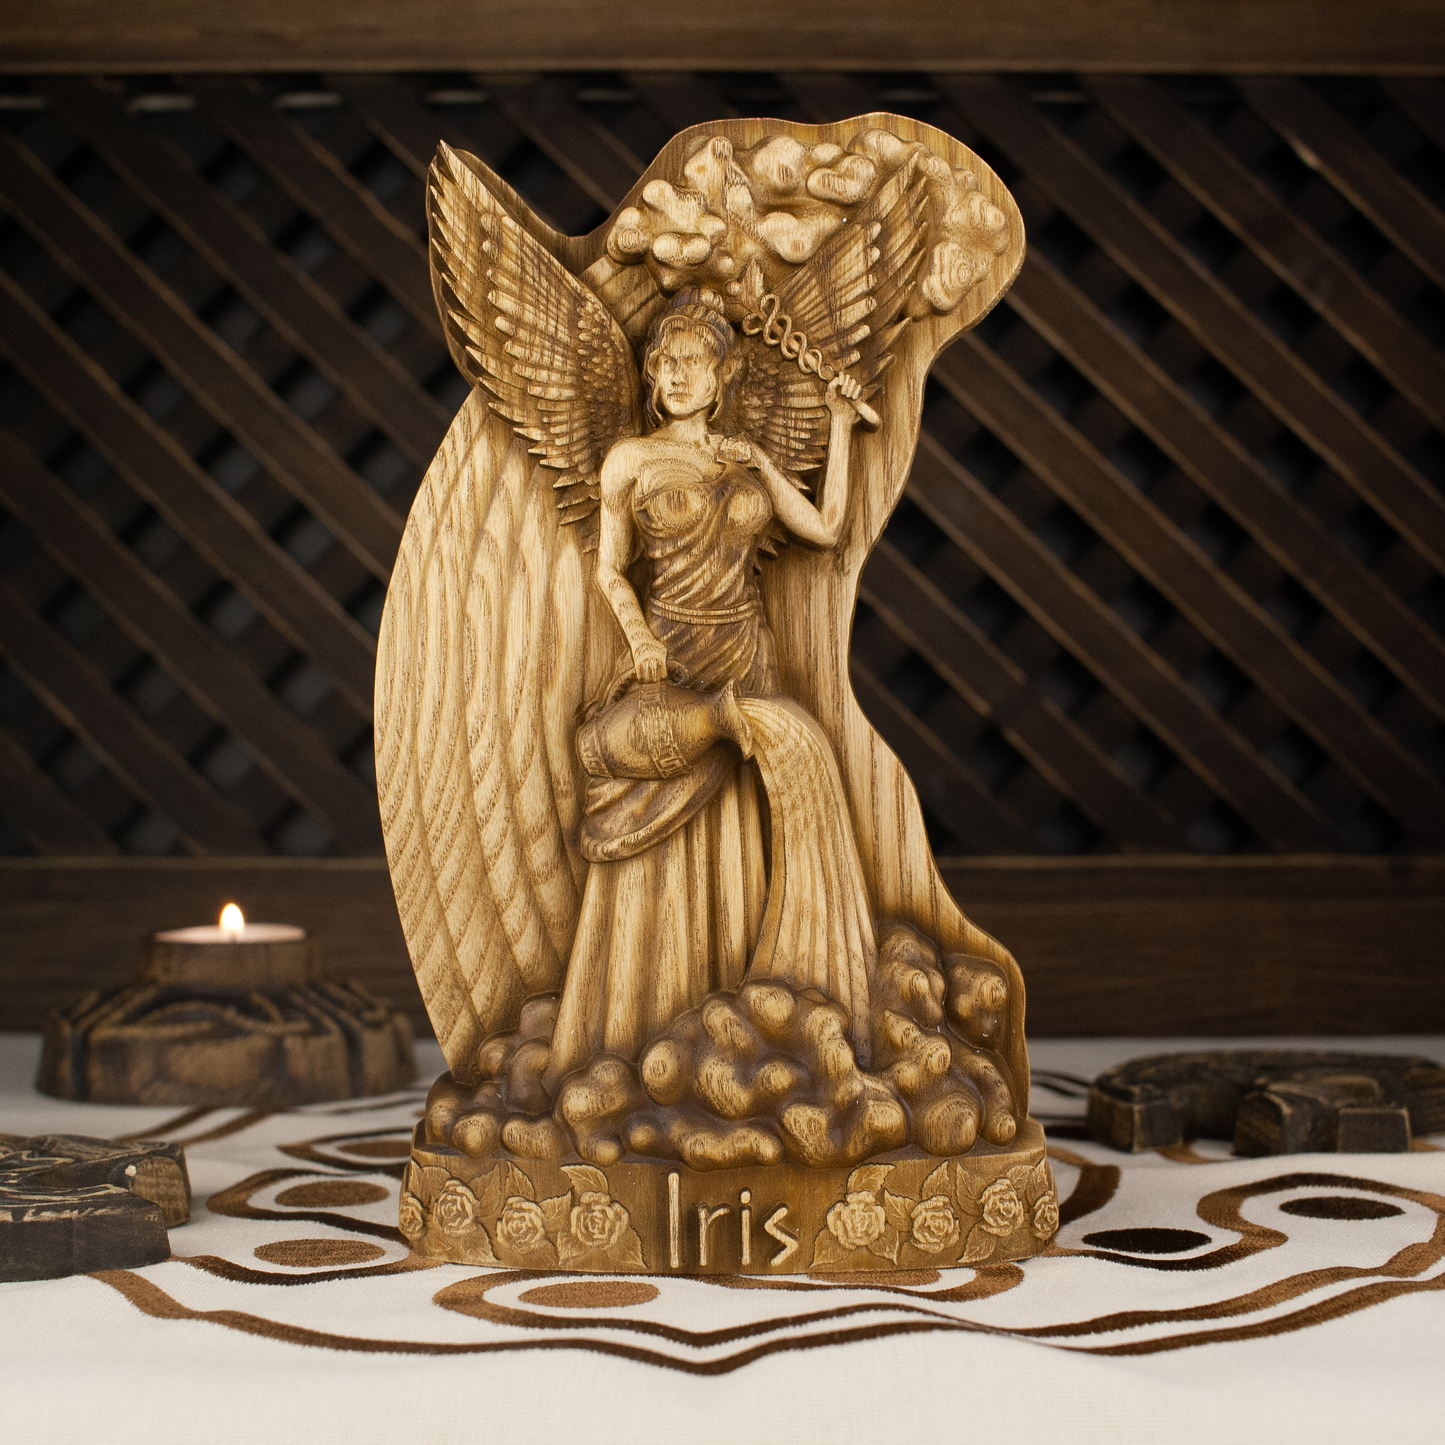 Iris Greek goddess statue, Greek sculpture Greek mythology Wooden statue Wood carving